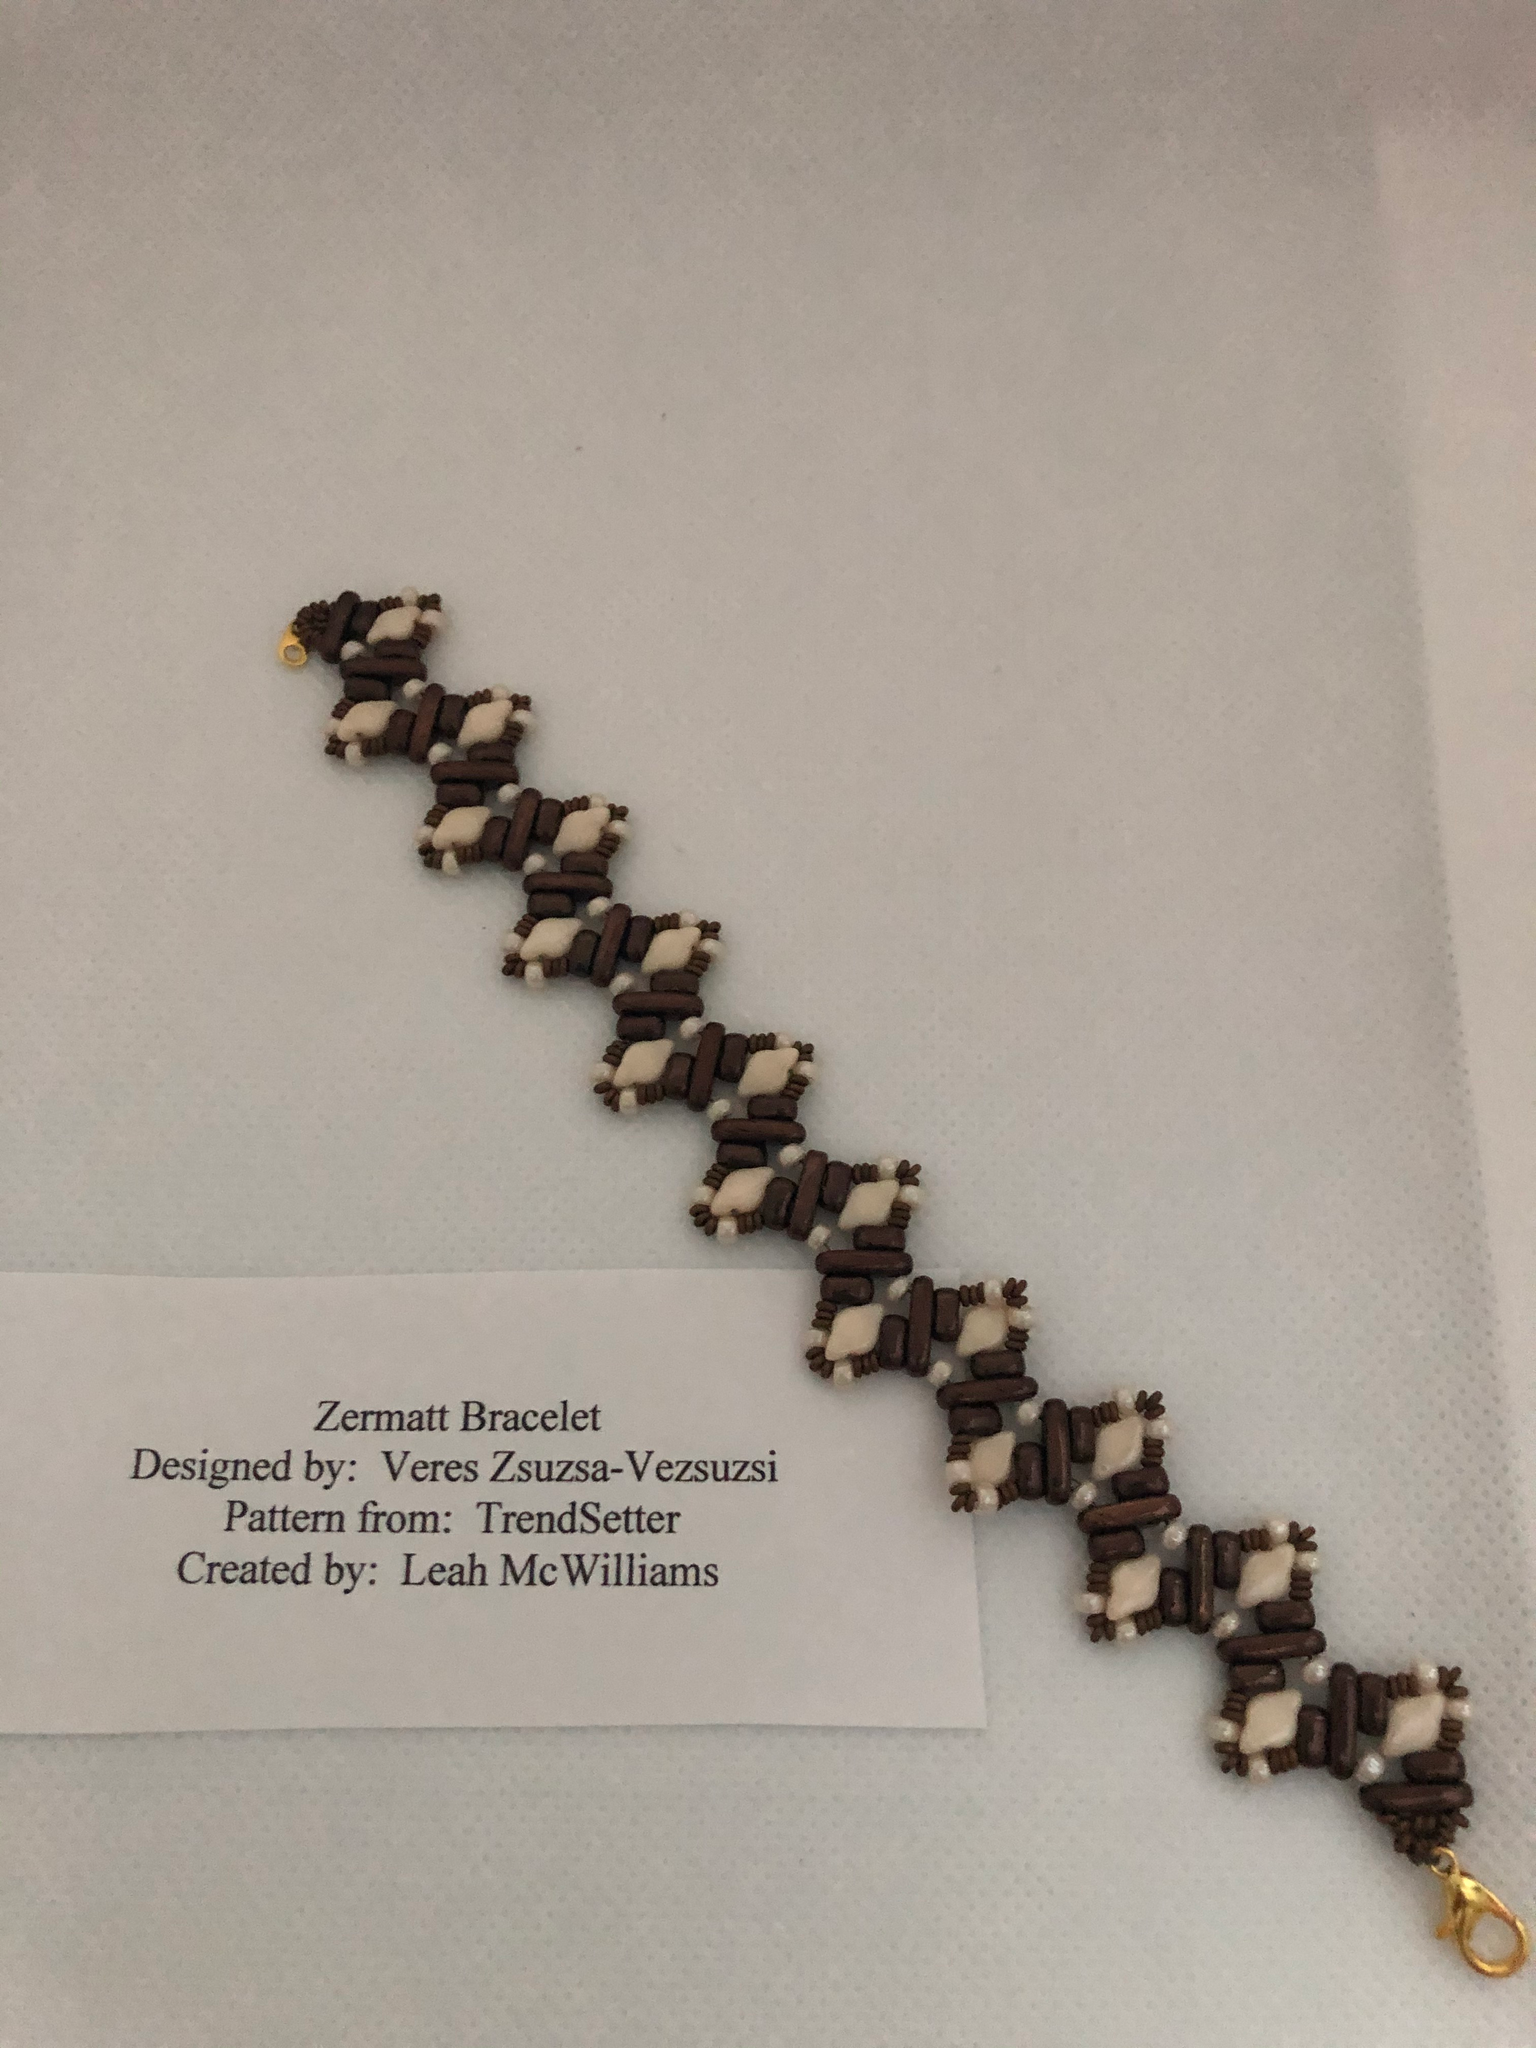 Zermatt Bracelet